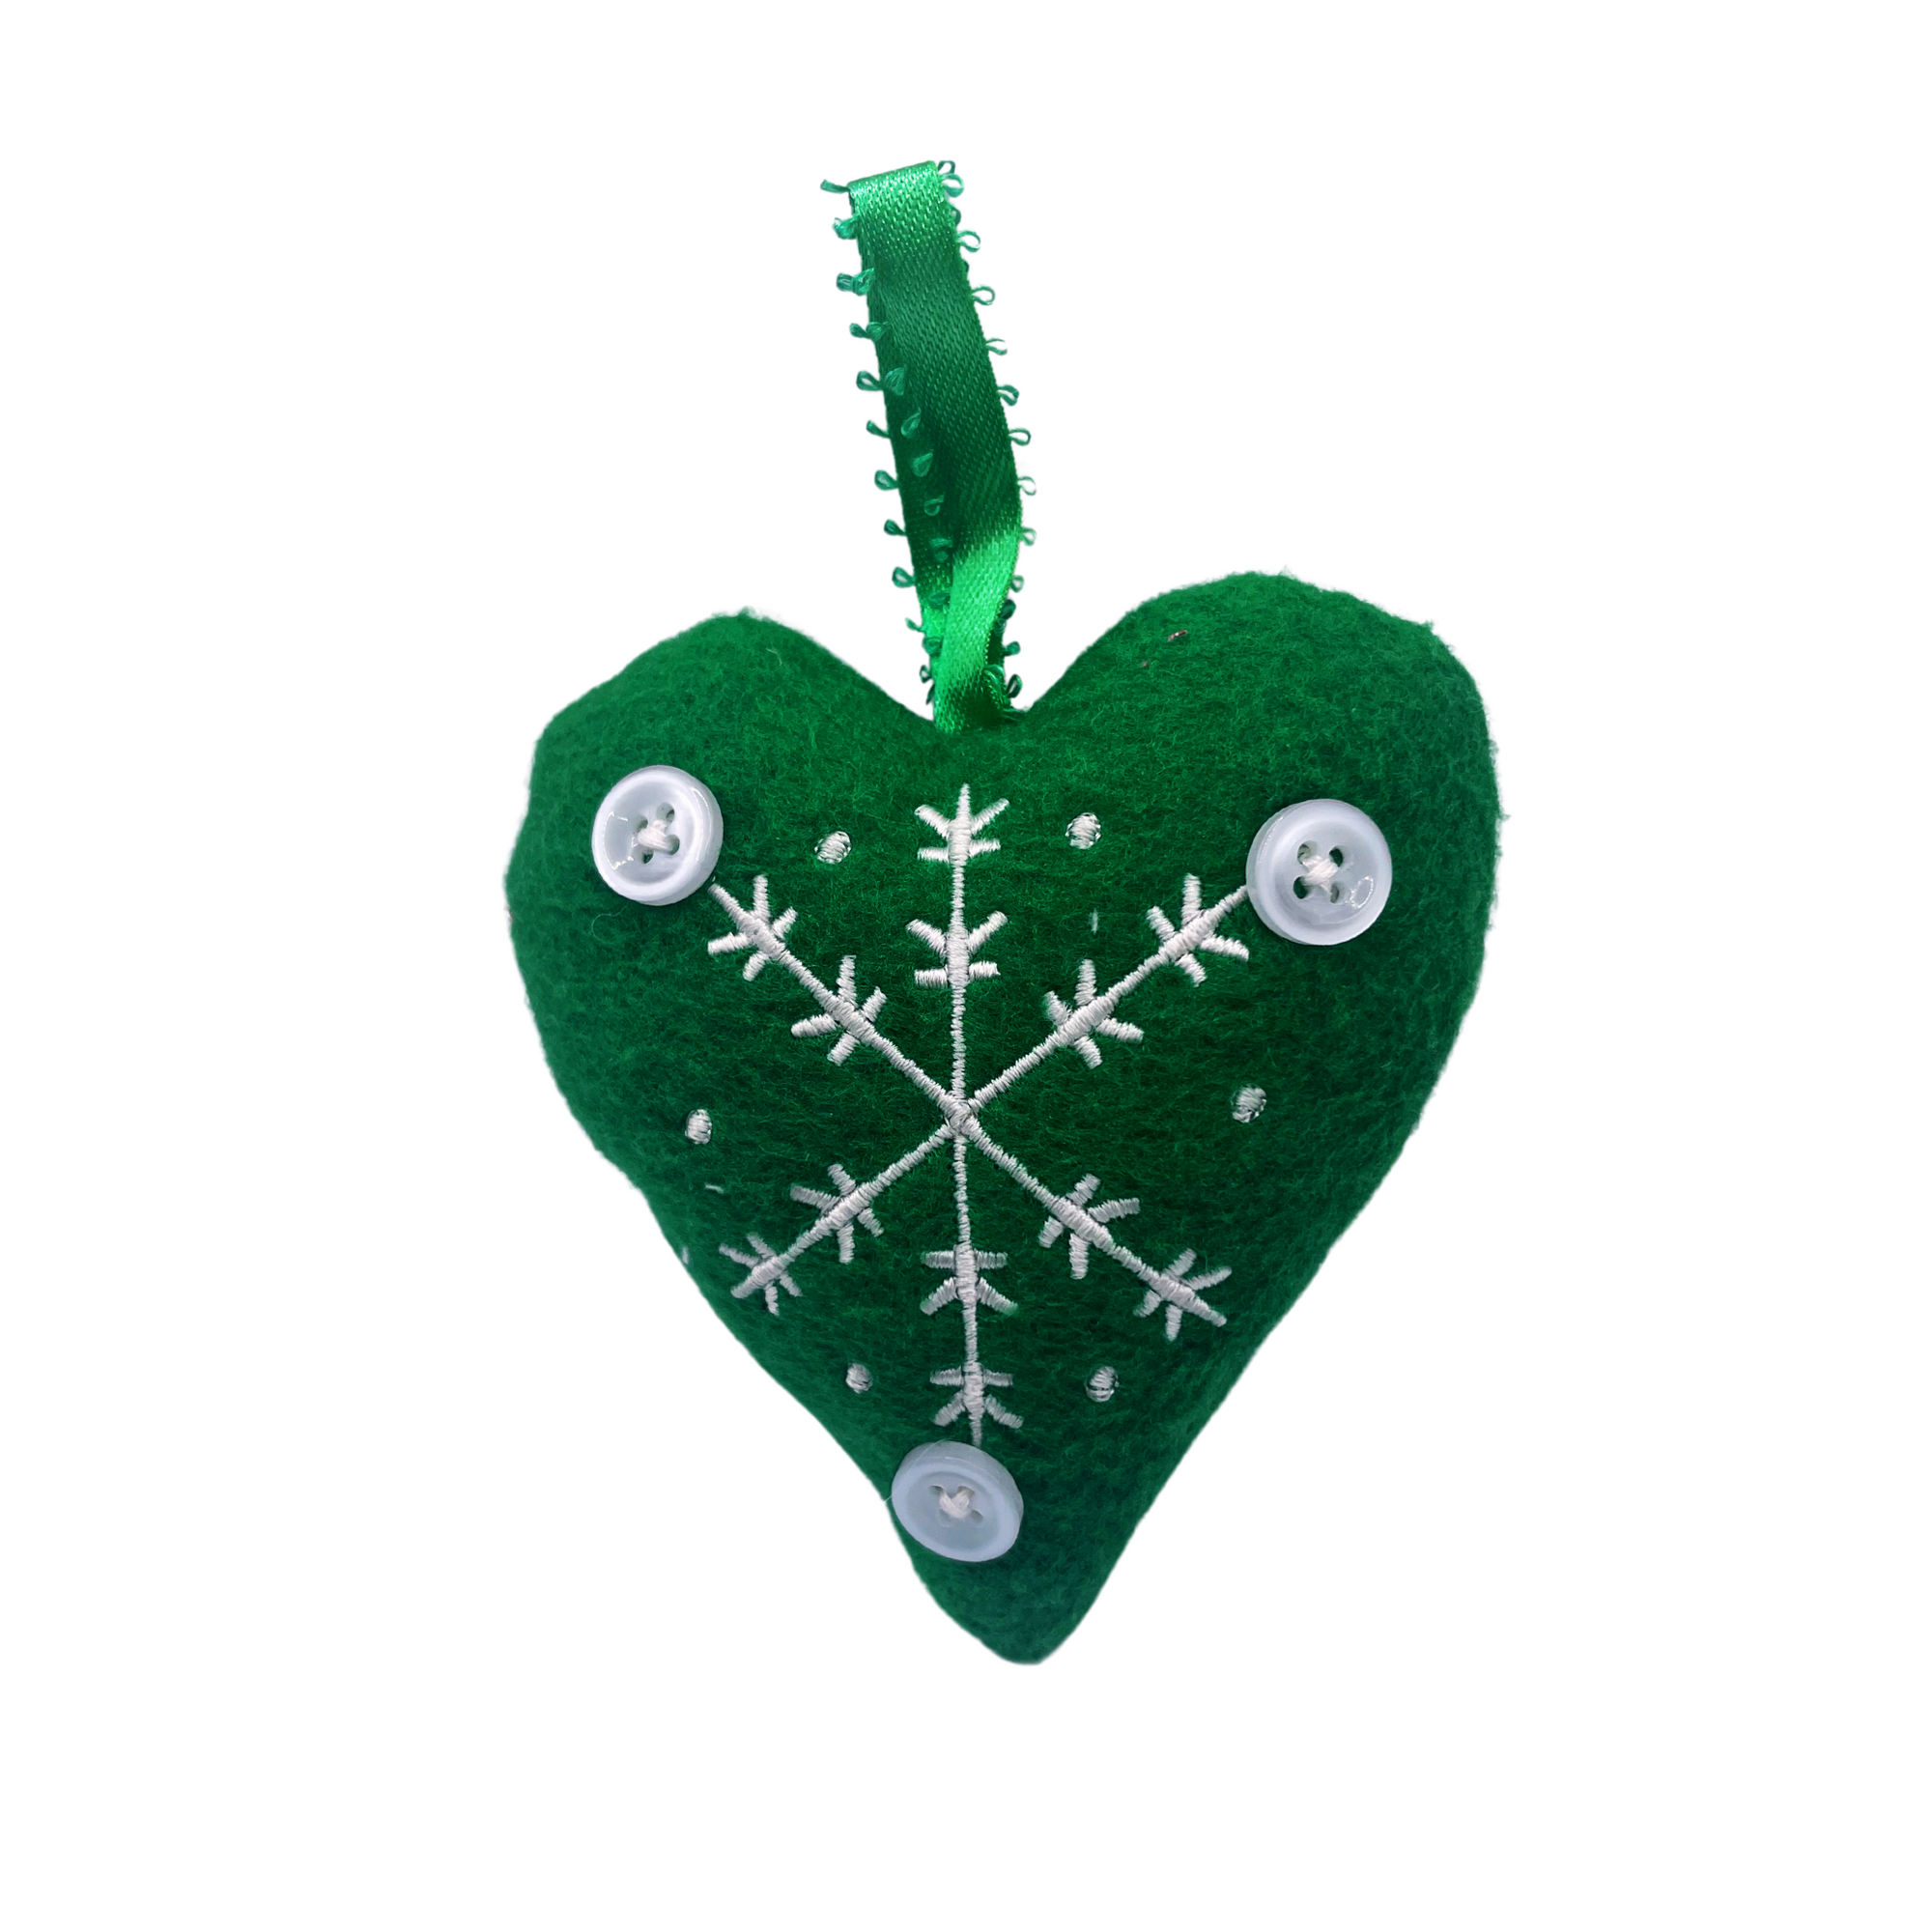 Kiyome Hanging Green Fabric Heart Decoration 9 x 8cm